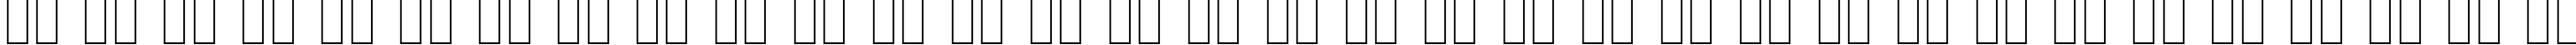 Пример написания русского алфавита шрифтом Aunchanted Thin